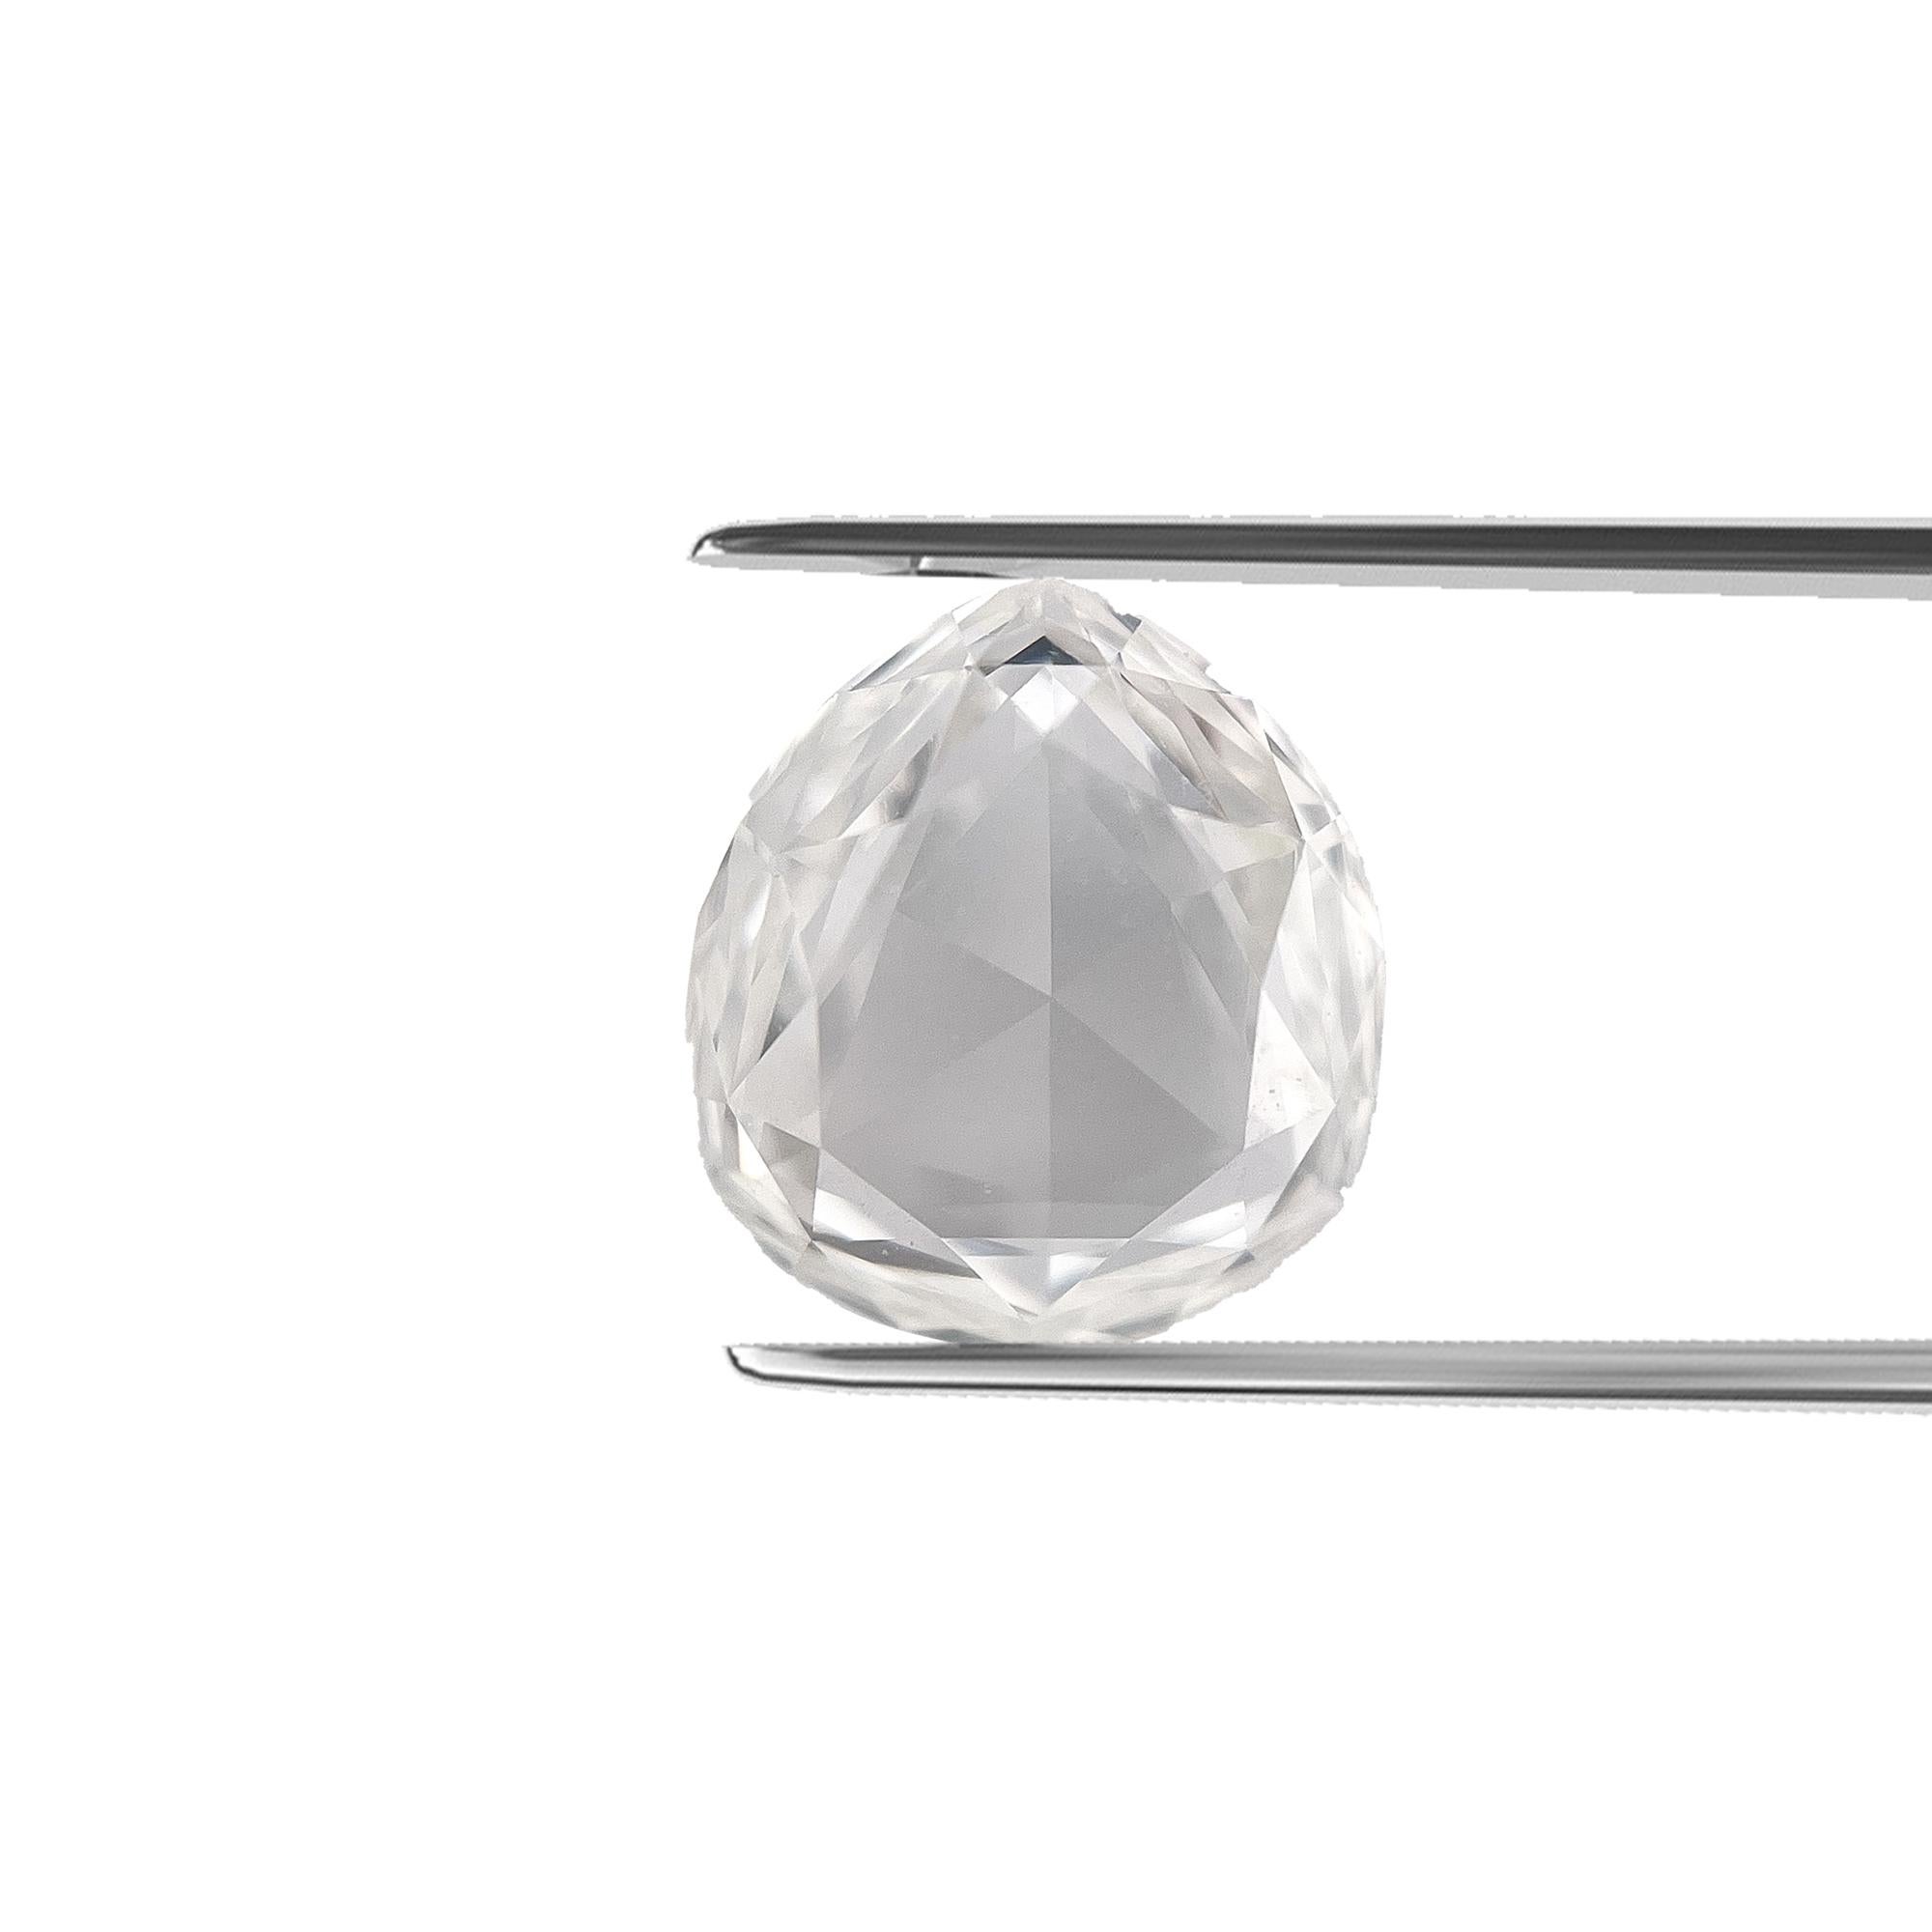 ITEM DESCRIPTION

ID #: NYC56870
Stone Shape: MODIFIED PEAR BRILLIANT
Diamond Weight: 0.84ct
Clarity: SI1
Color: G
Cut:	Excellent
Measurements: 6.66 x 5.97 x 2.22 mm
Depth %:	37.2%
Table %:	60%
Symmetry: Good
Polish: Good
Fluorescence: